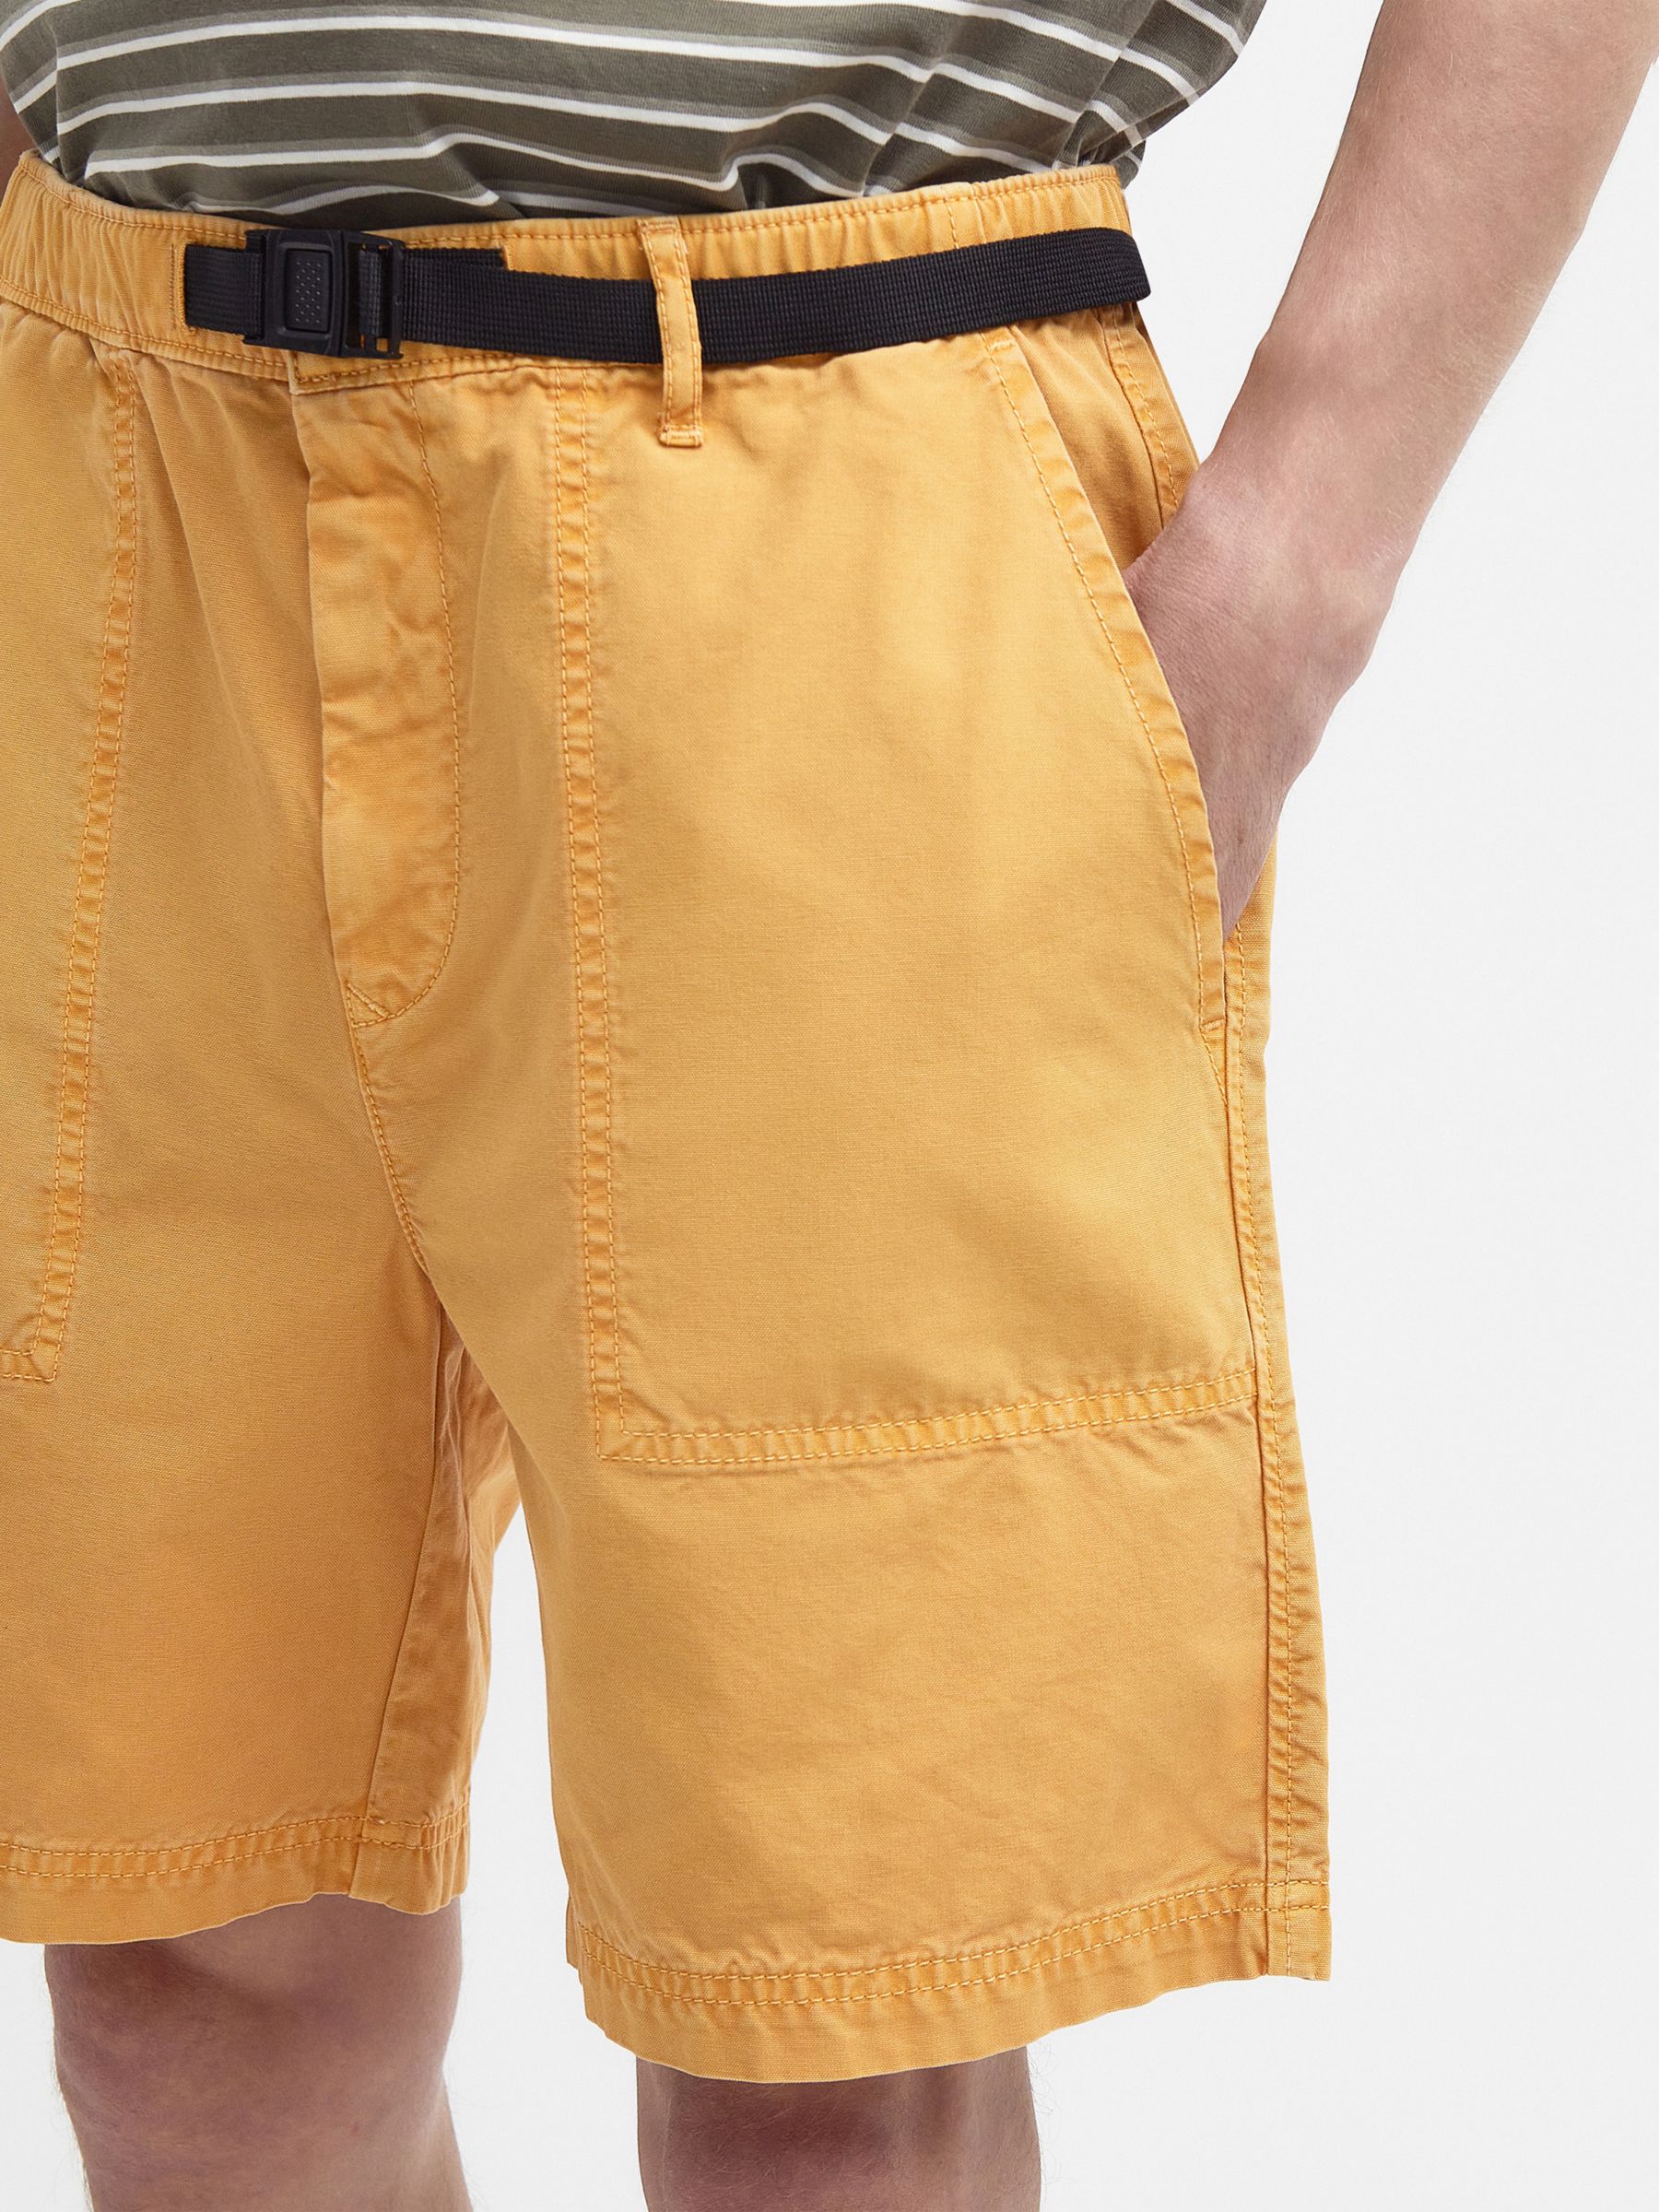 Barbour Grindle Cotton Canvas Twill Shorts, Honey Gold, M